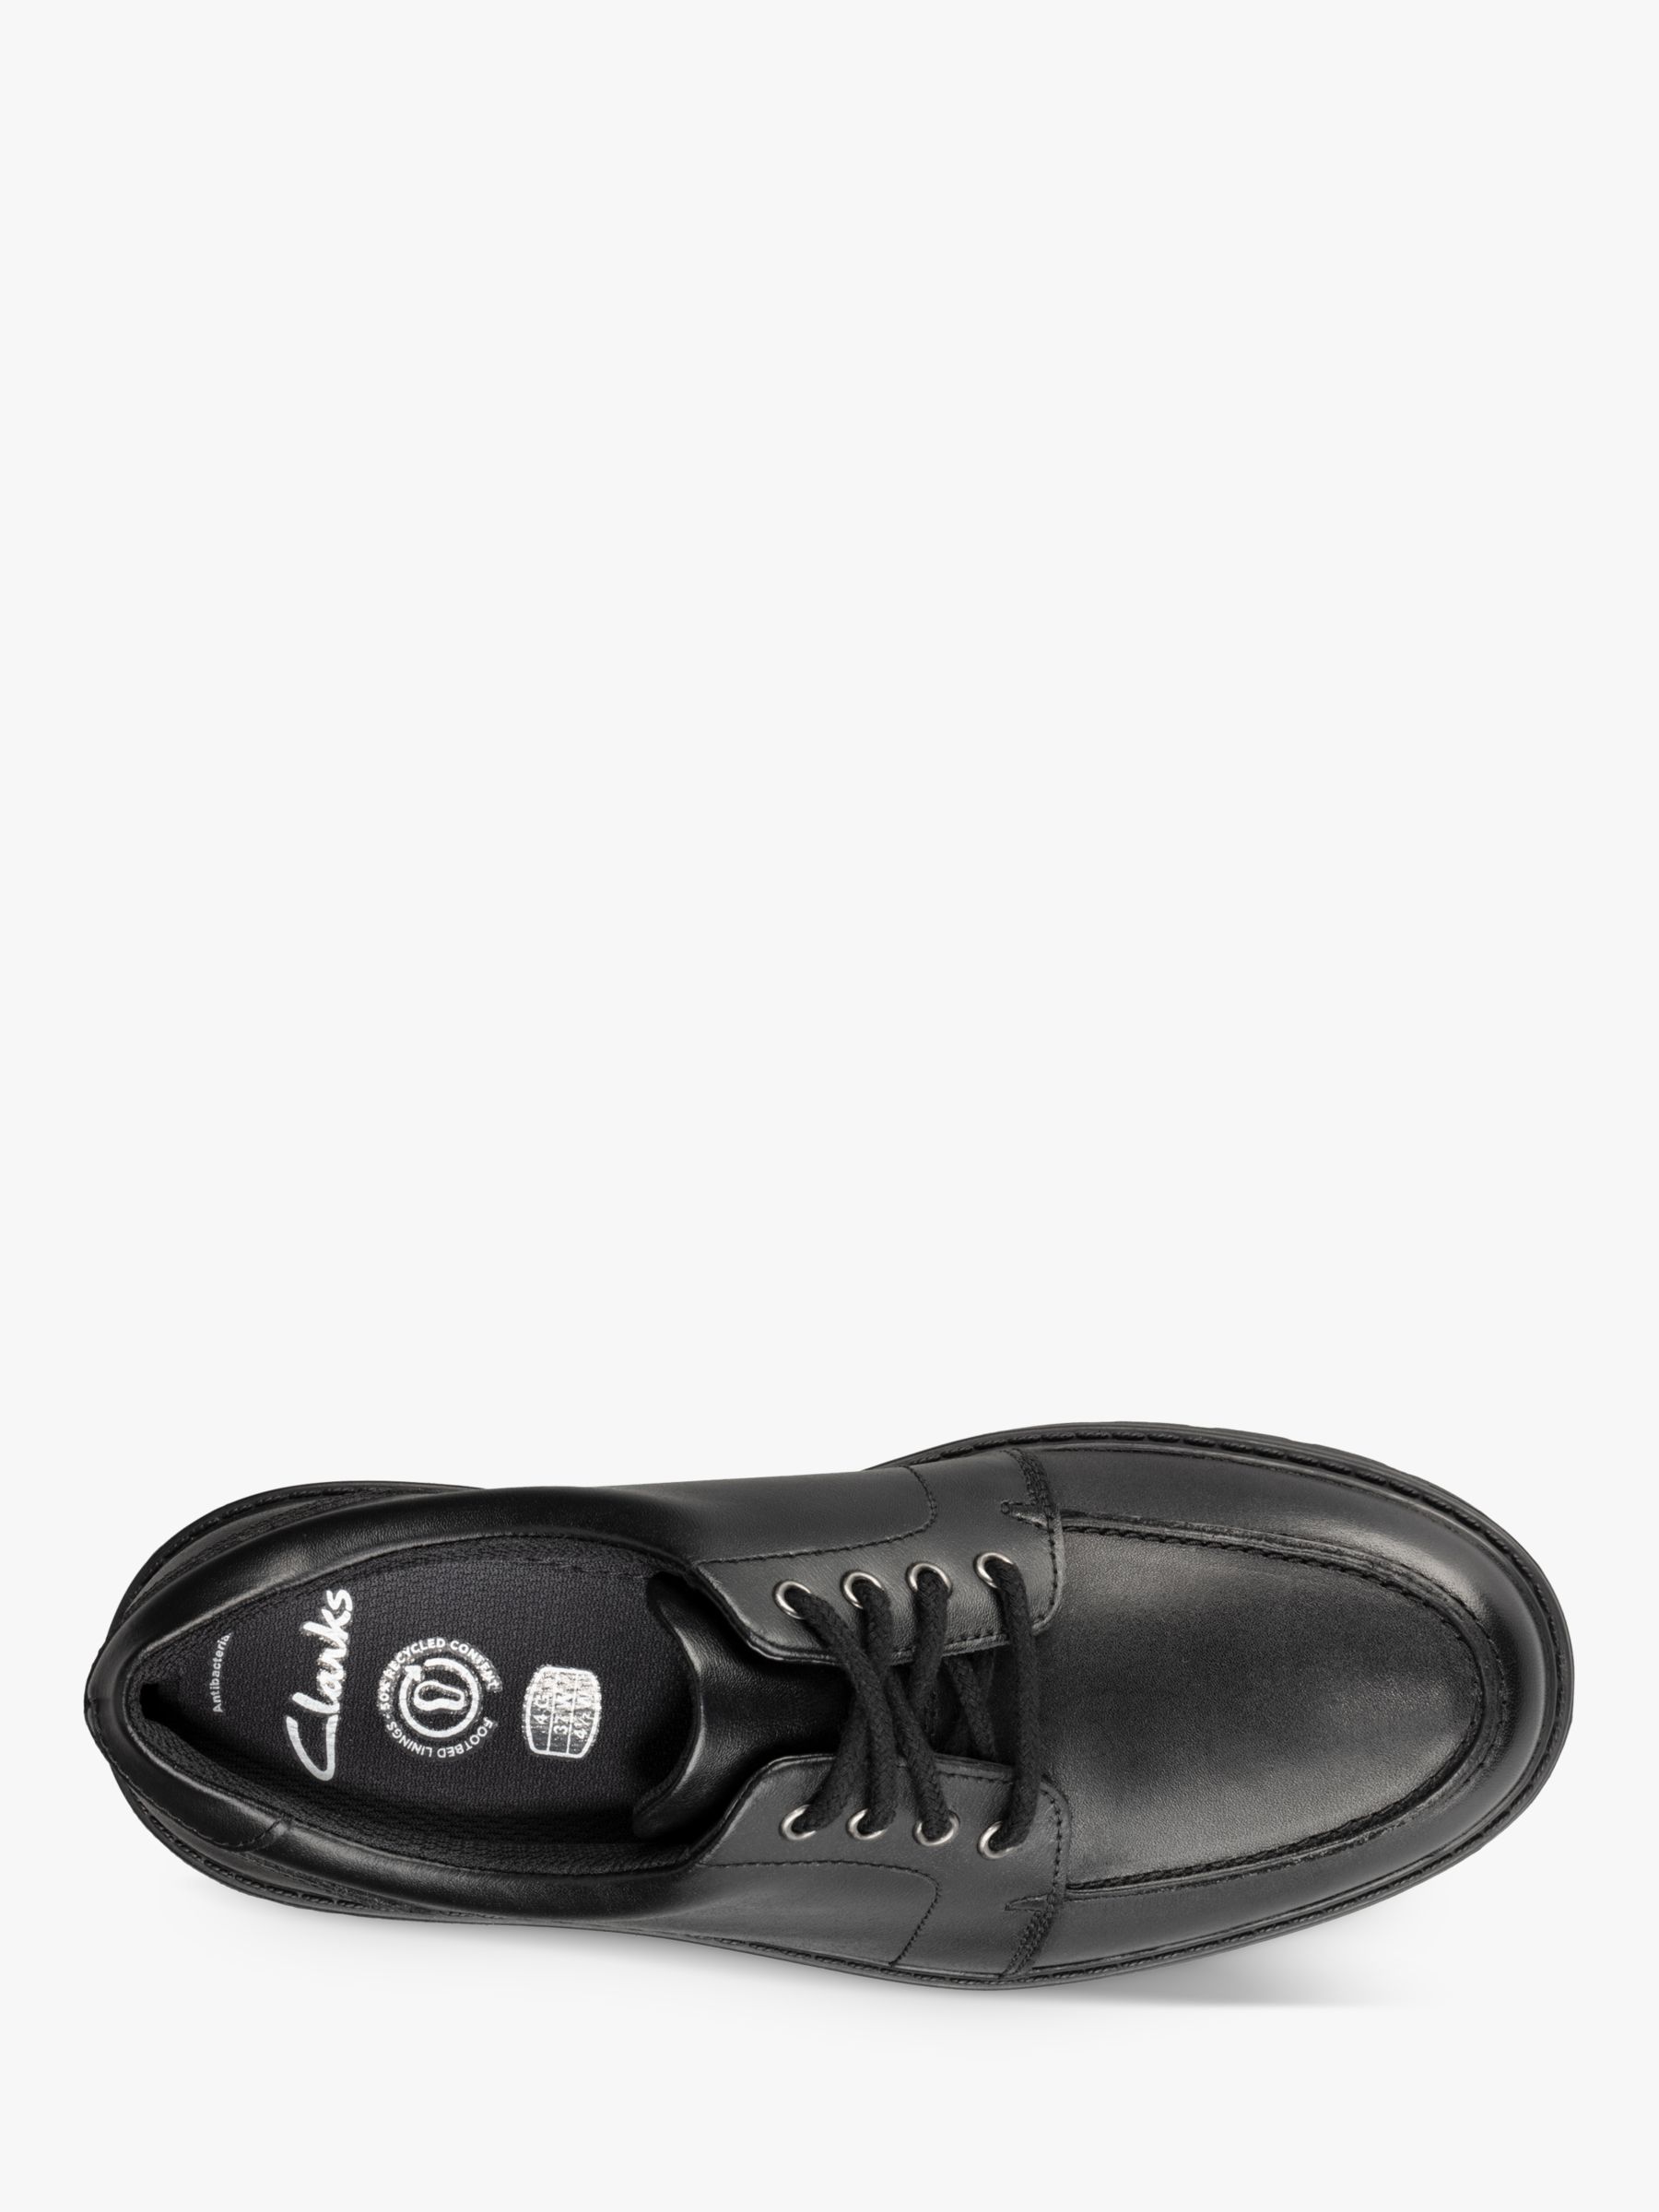 Clarks Kids' Loxham Pace Leather School Shoes, Black, 3F